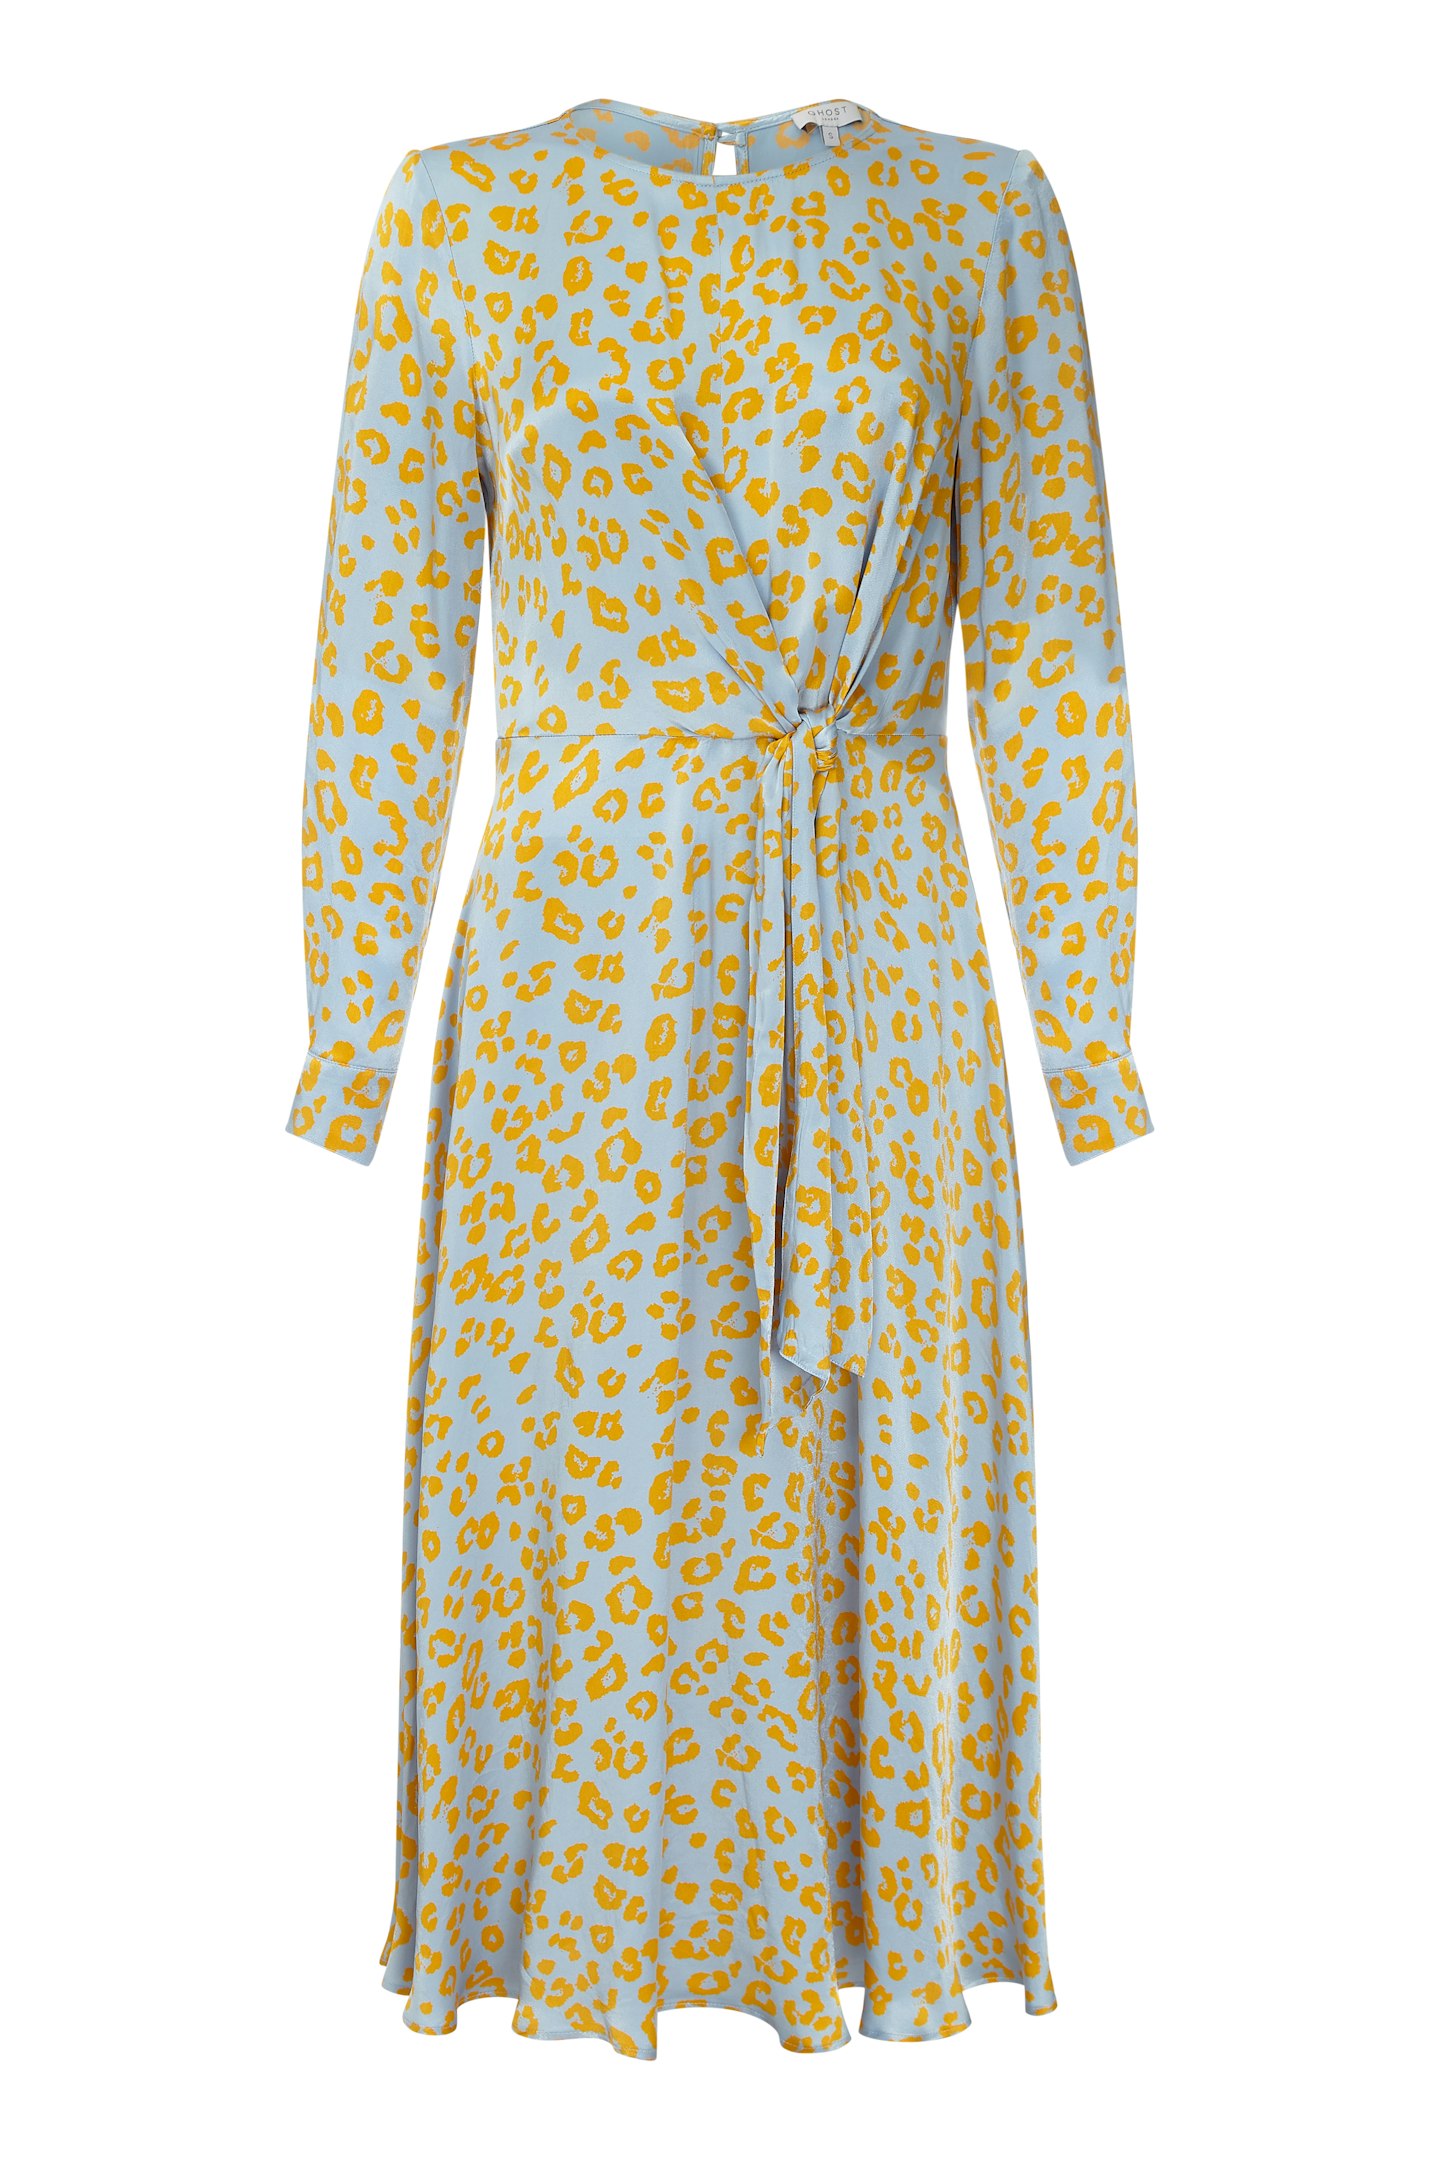 Ghost, Margo Cheetah Dress, £165